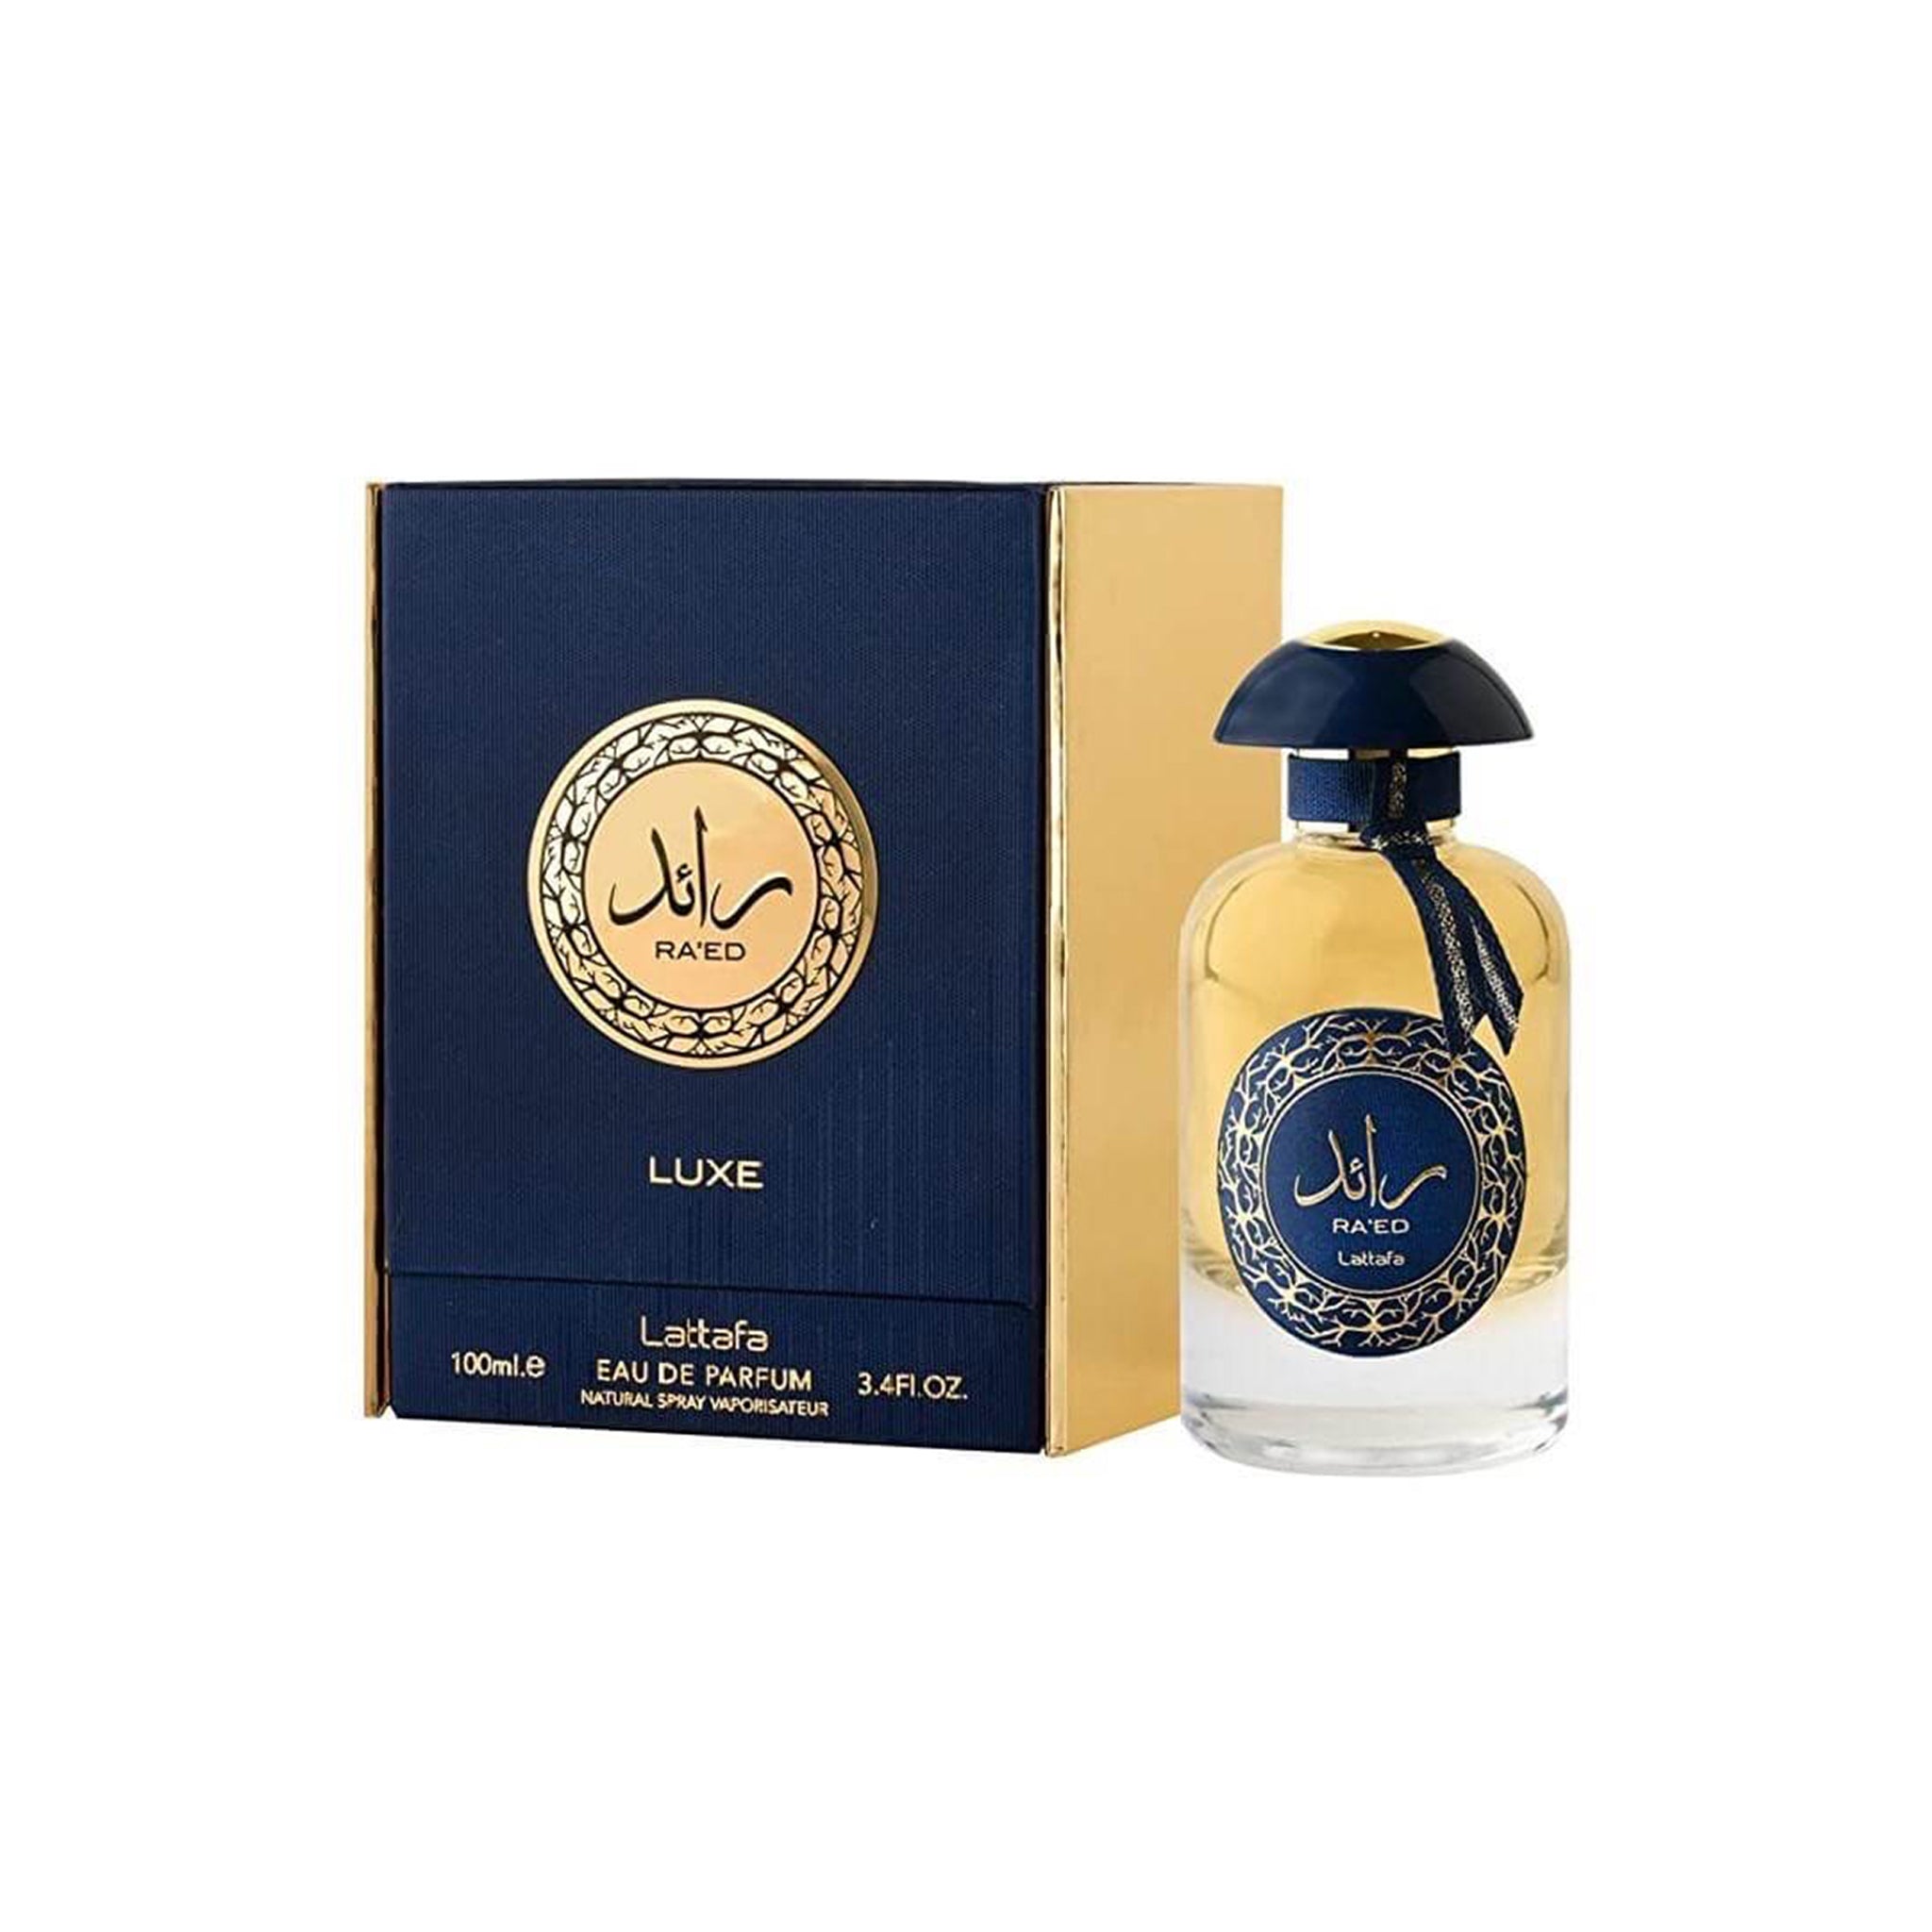 Ra’ed Luxe Eau De Parfum 100ml By Lattafa